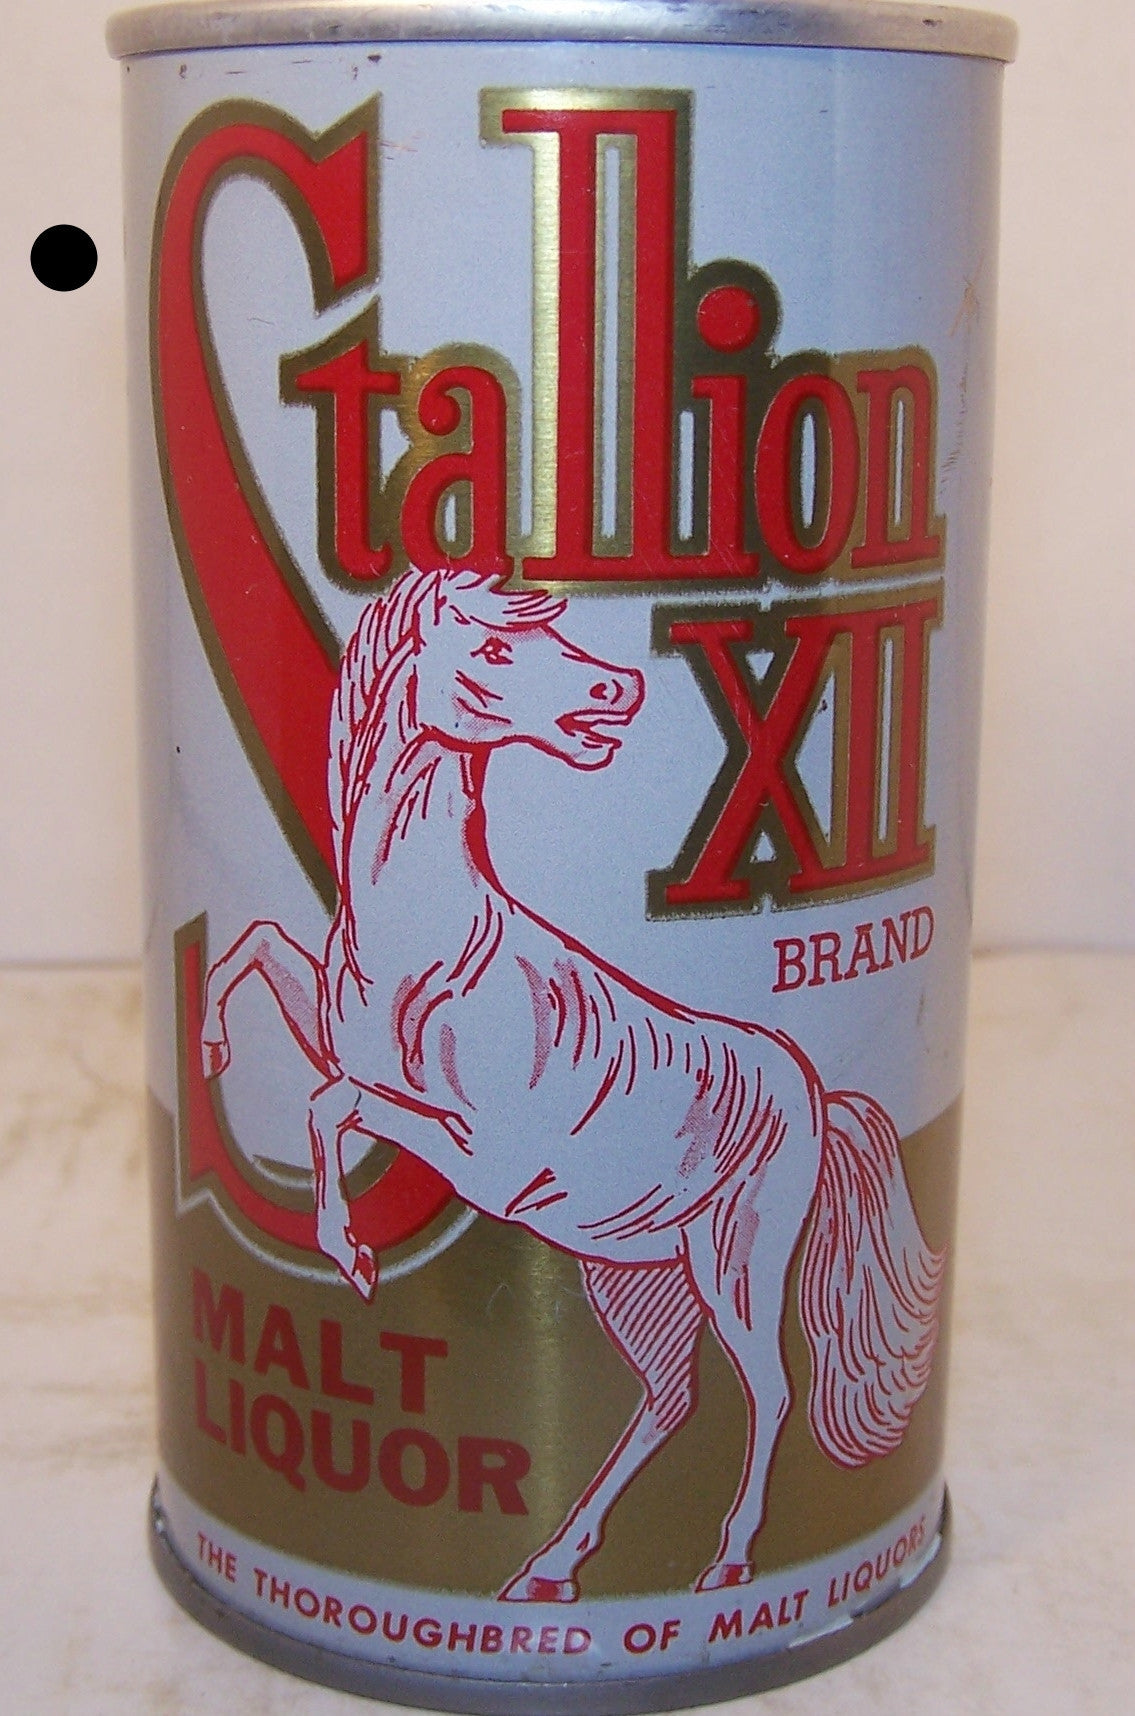 Stallion XII Malt Liquor enamel, USBC 126-4, grade 1 Sold in 2016